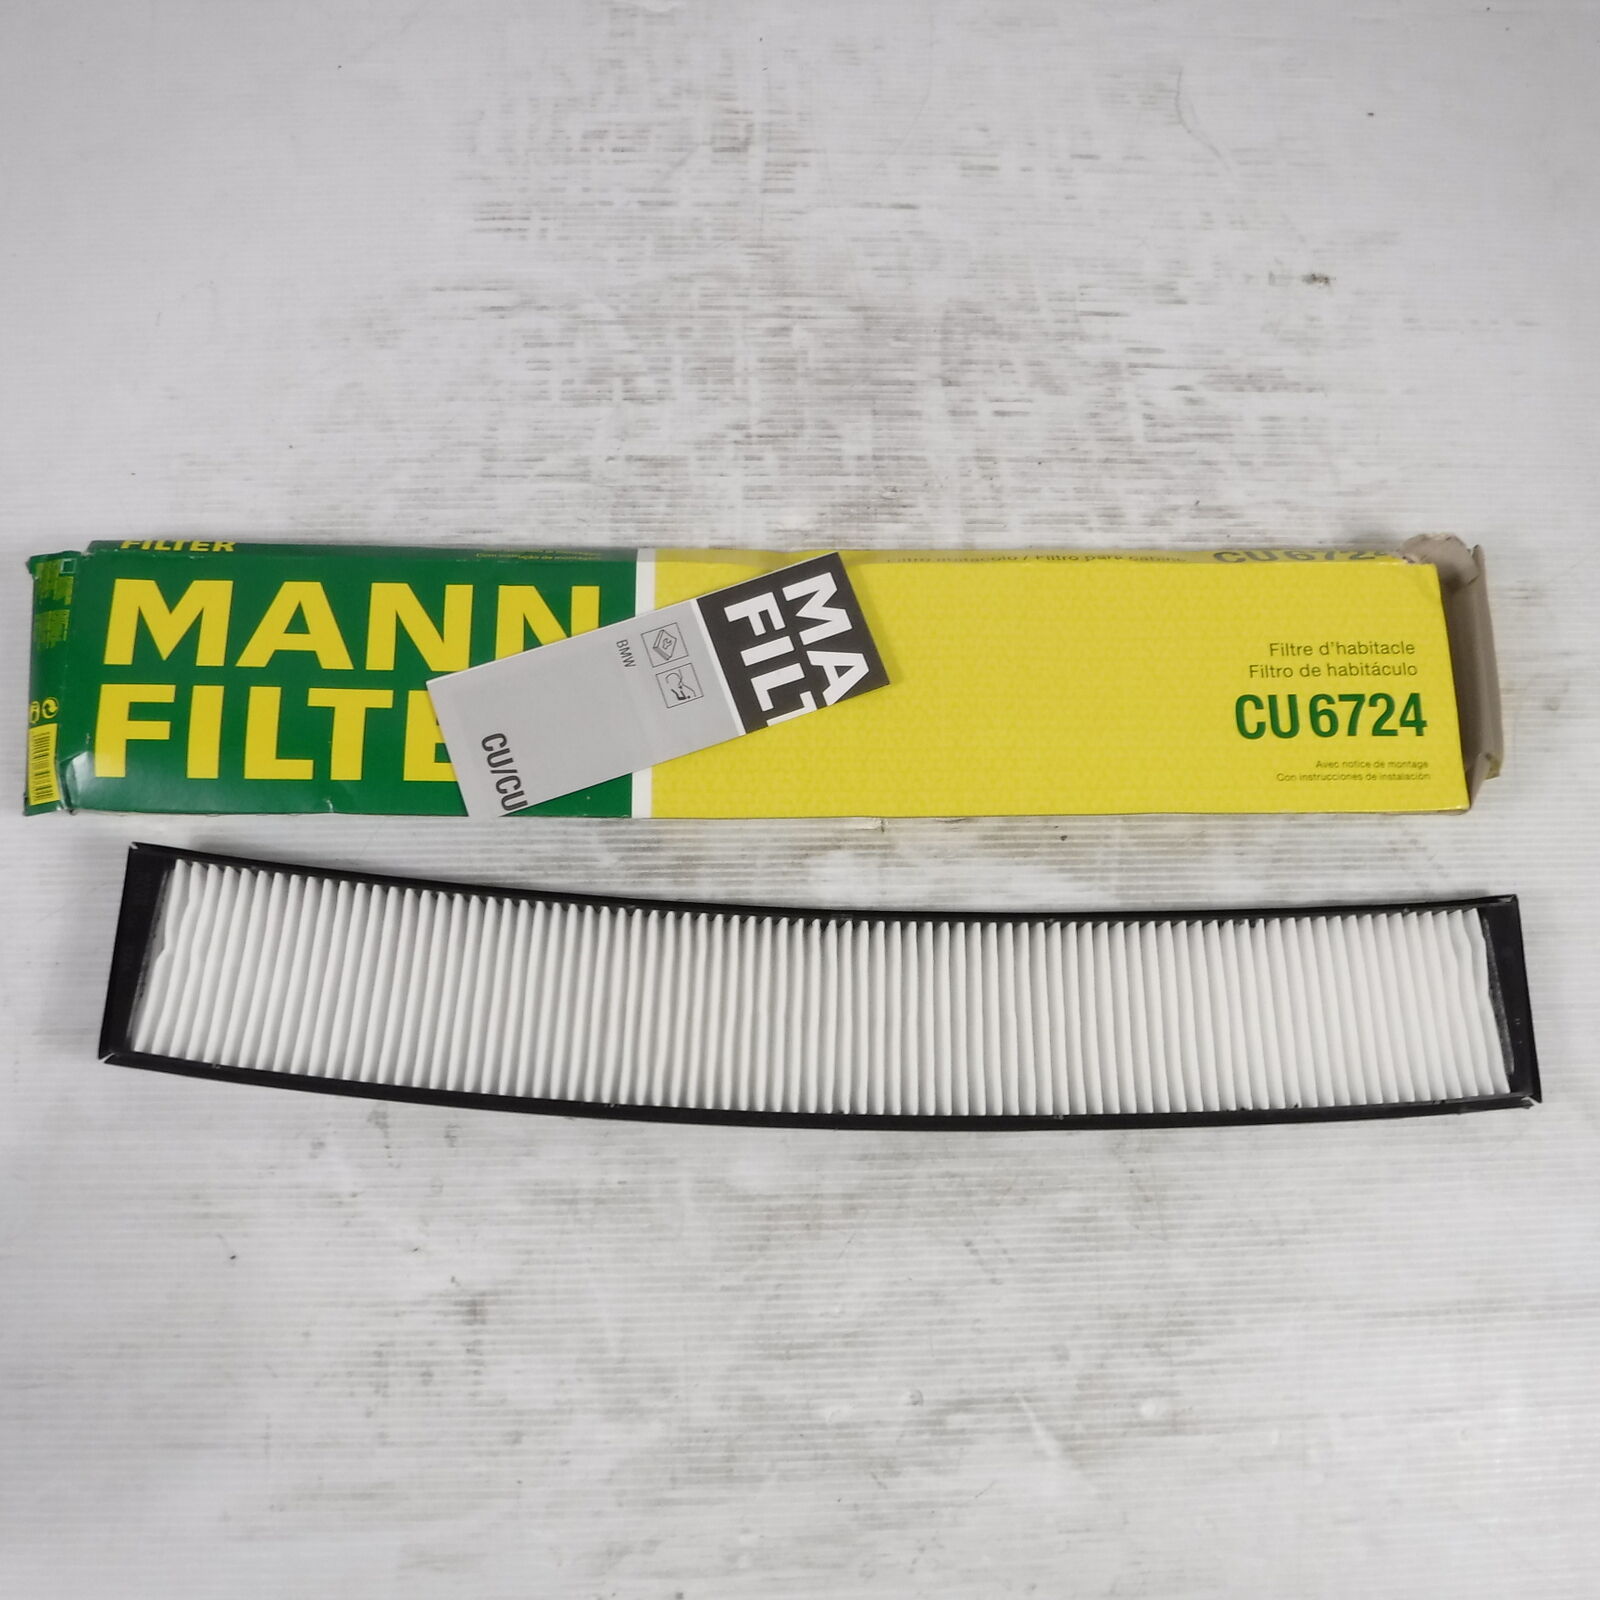 MANN CU6724 Filter interior air for ALPINA BMW for sale online | eBay